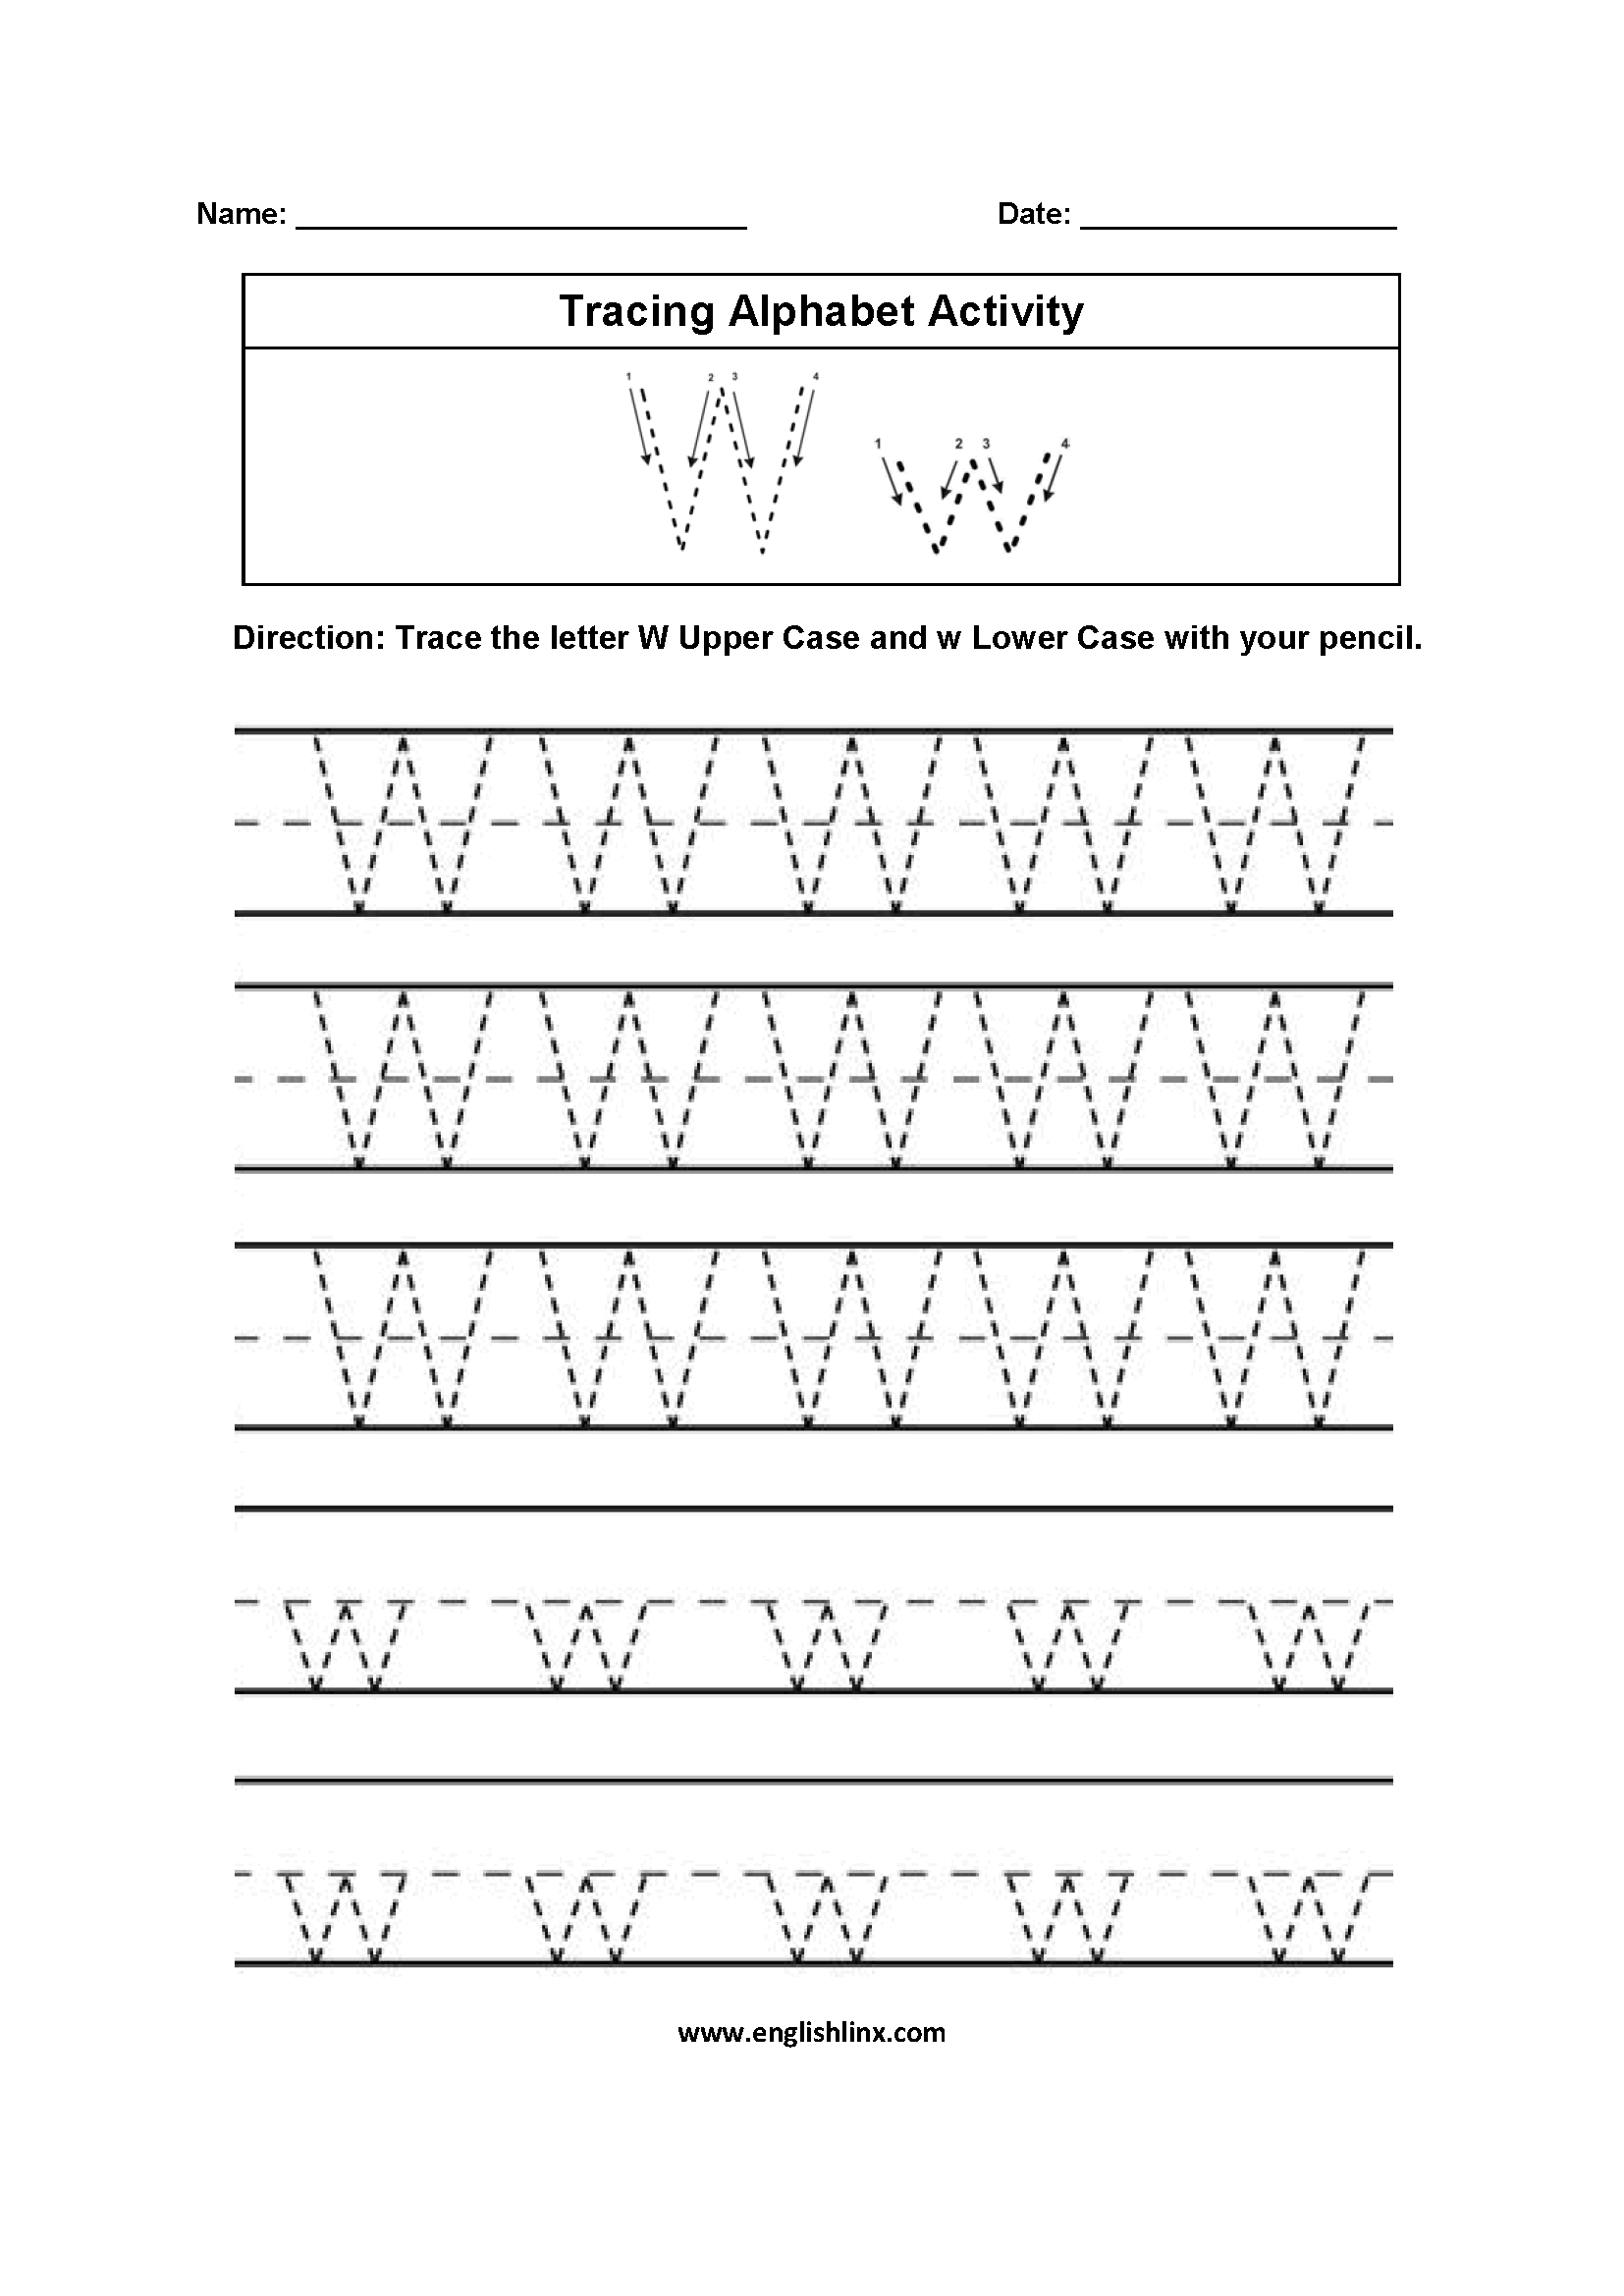 Letter W Tracing Alphabet Worksheets | Alphabet Worksheets throughout Tracing Letter W Worksheets